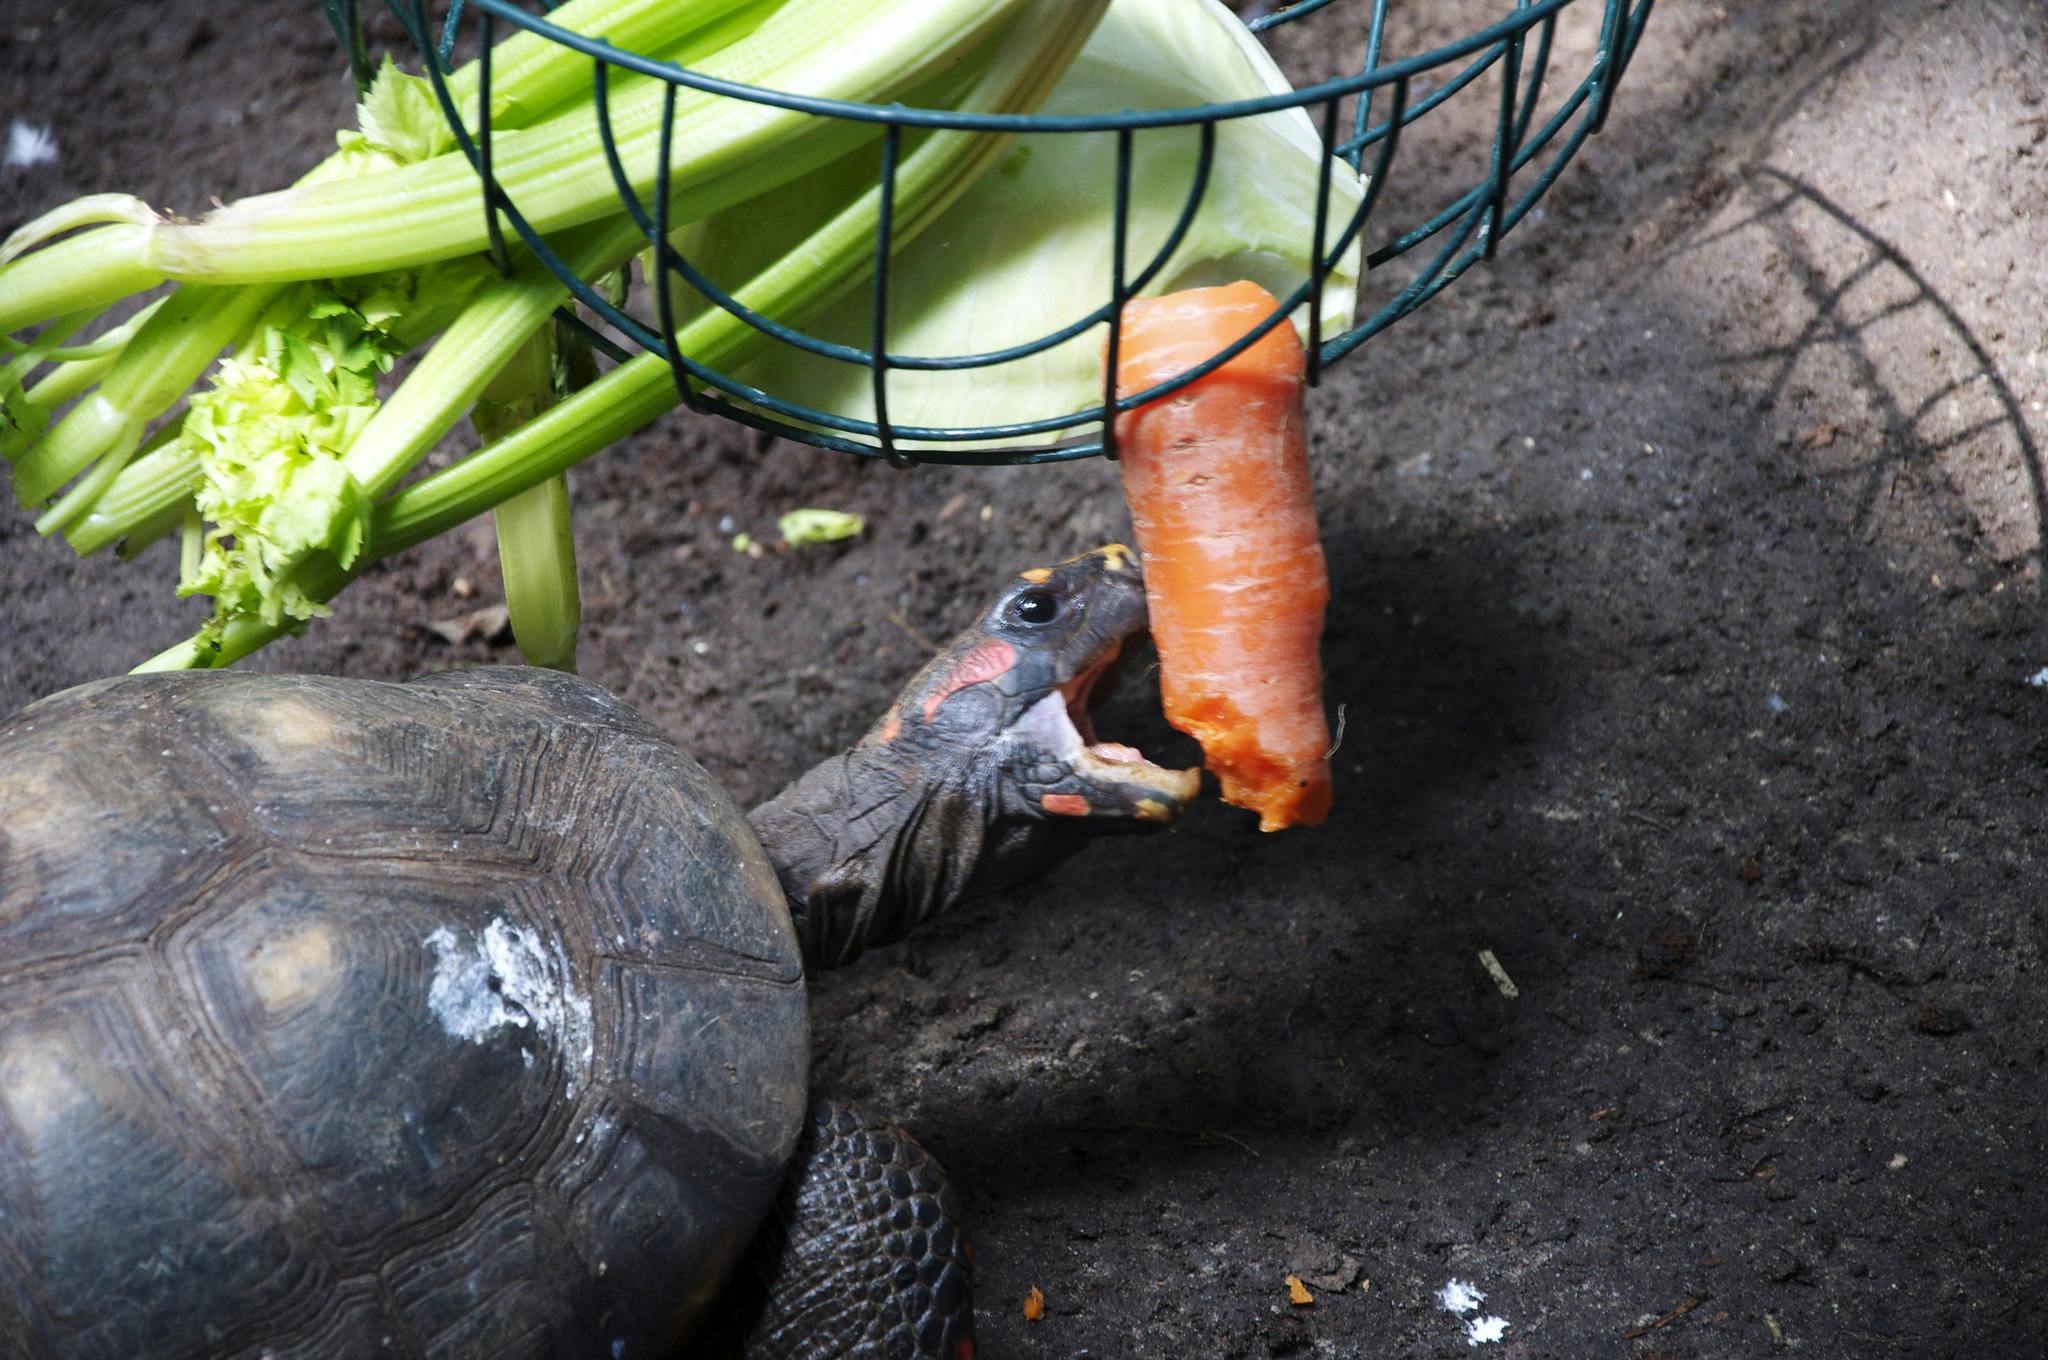 Selv gamle grøntsager kan gavne. Her hos en skildpadde i Københavns Zoo. Foto: CCBY Alyssa Heaton